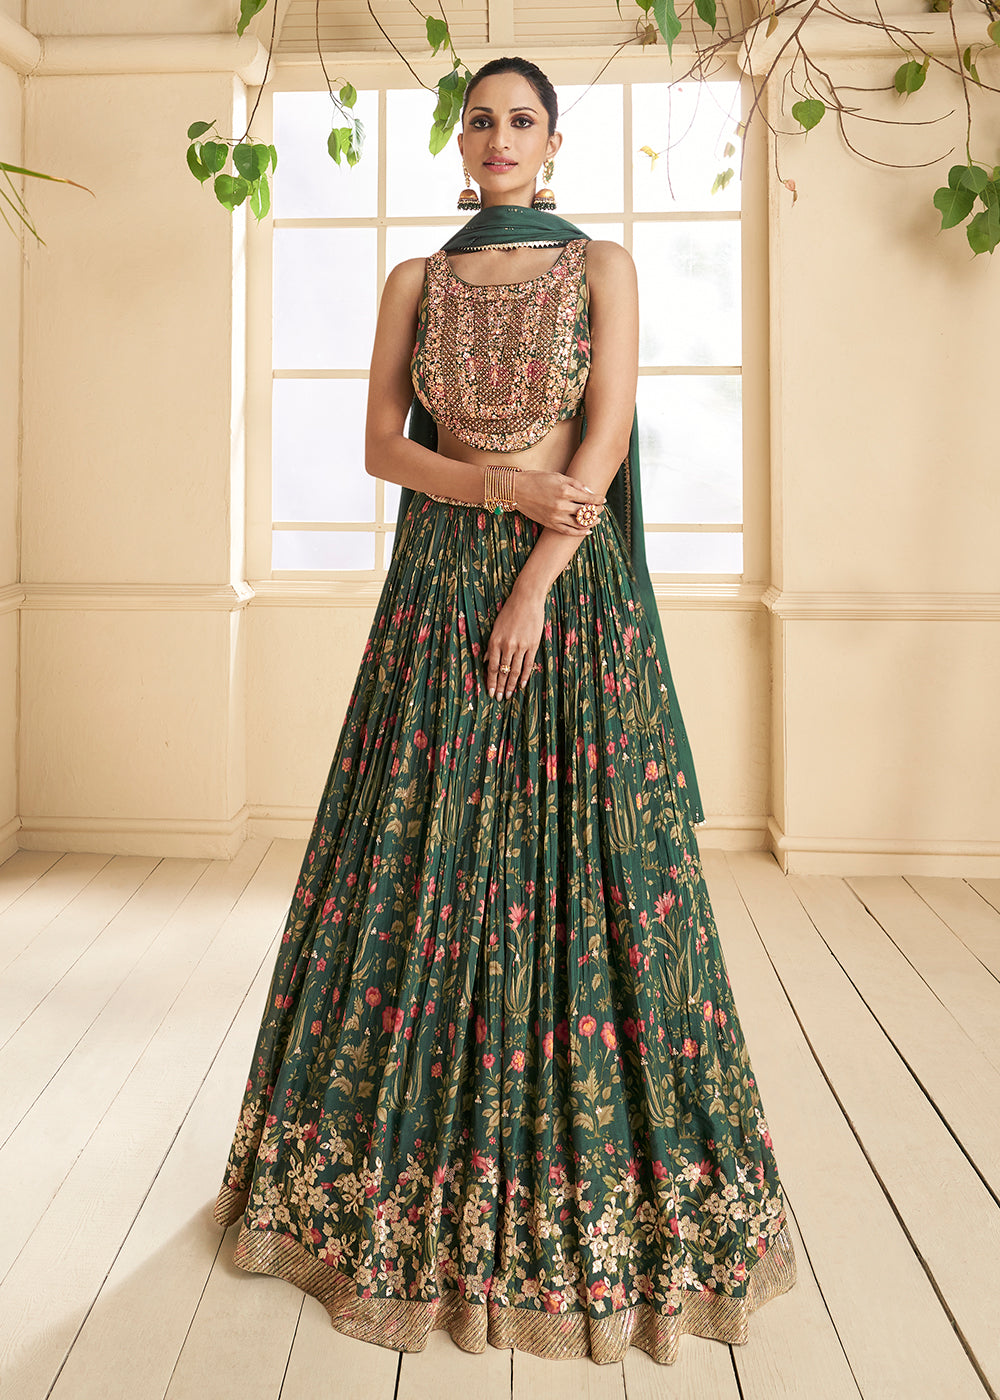 Pure Satin Silk Designer Made Saree With Blouse for Reception, Wedding &  Partywear Wear Premium Soft Silk Saree, Bride's Maid Sarees Blouse -   Israel